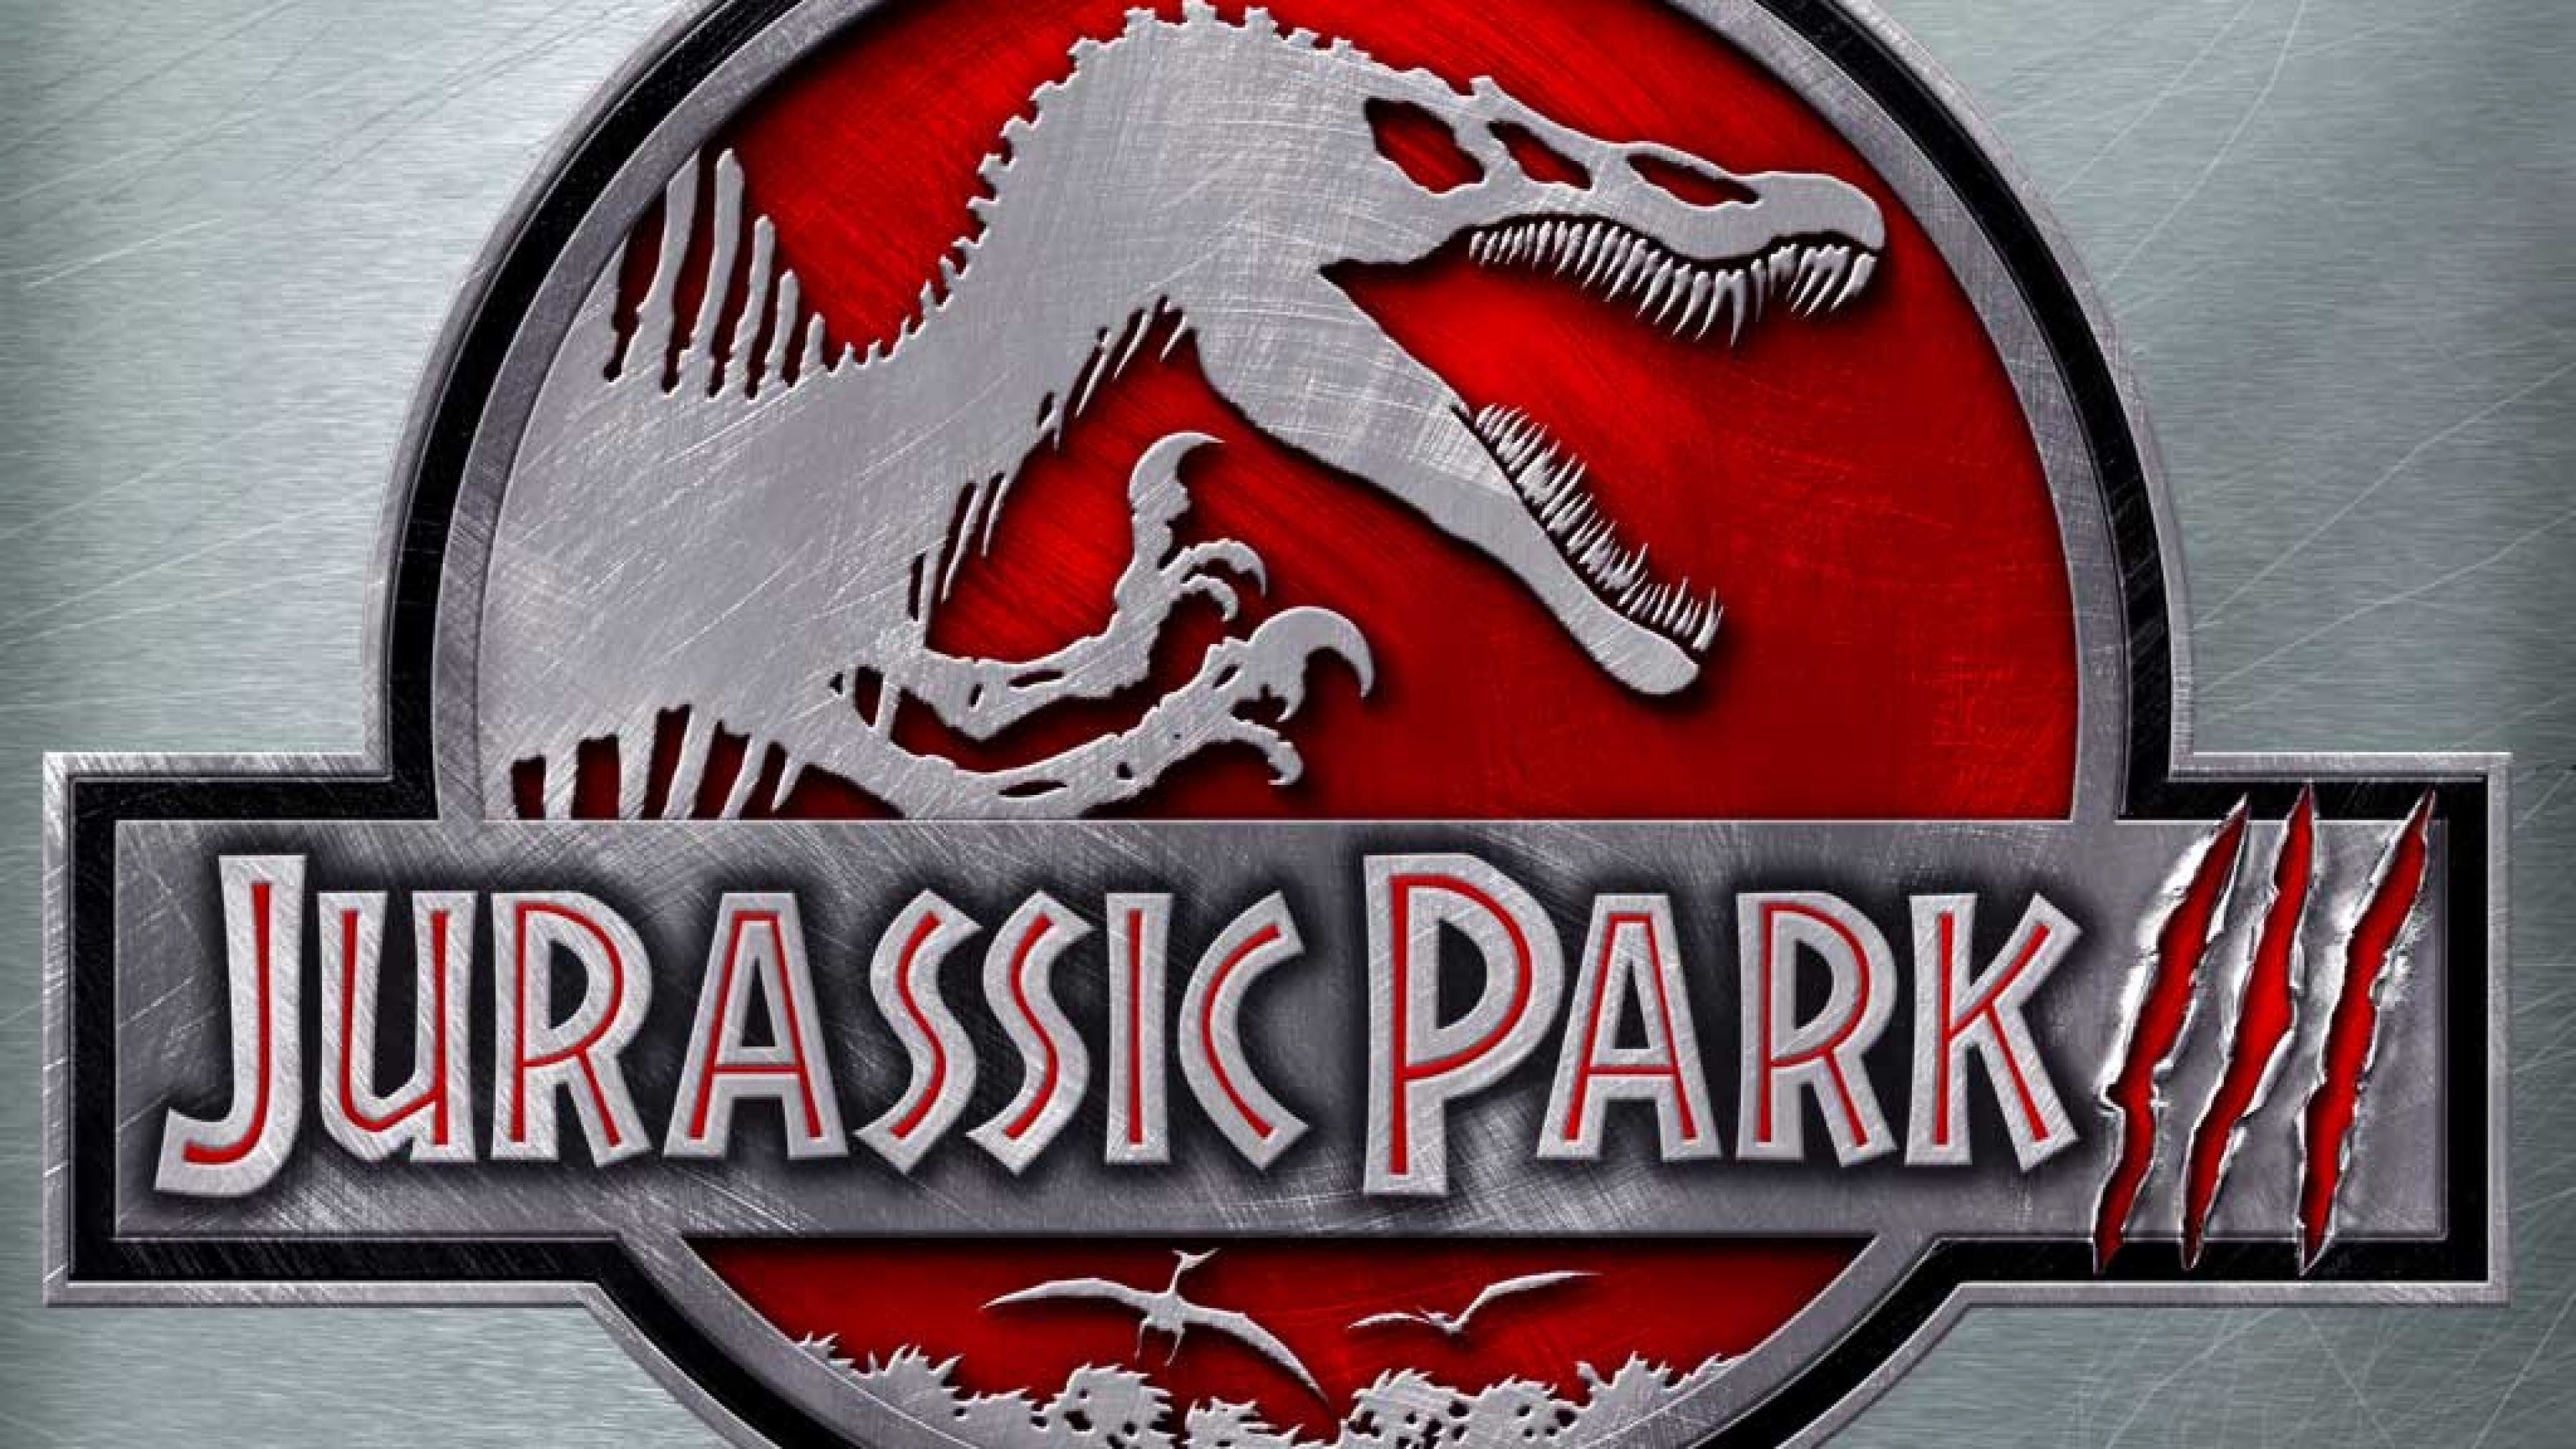 Jurassic Park 3 Wallpaper background picture